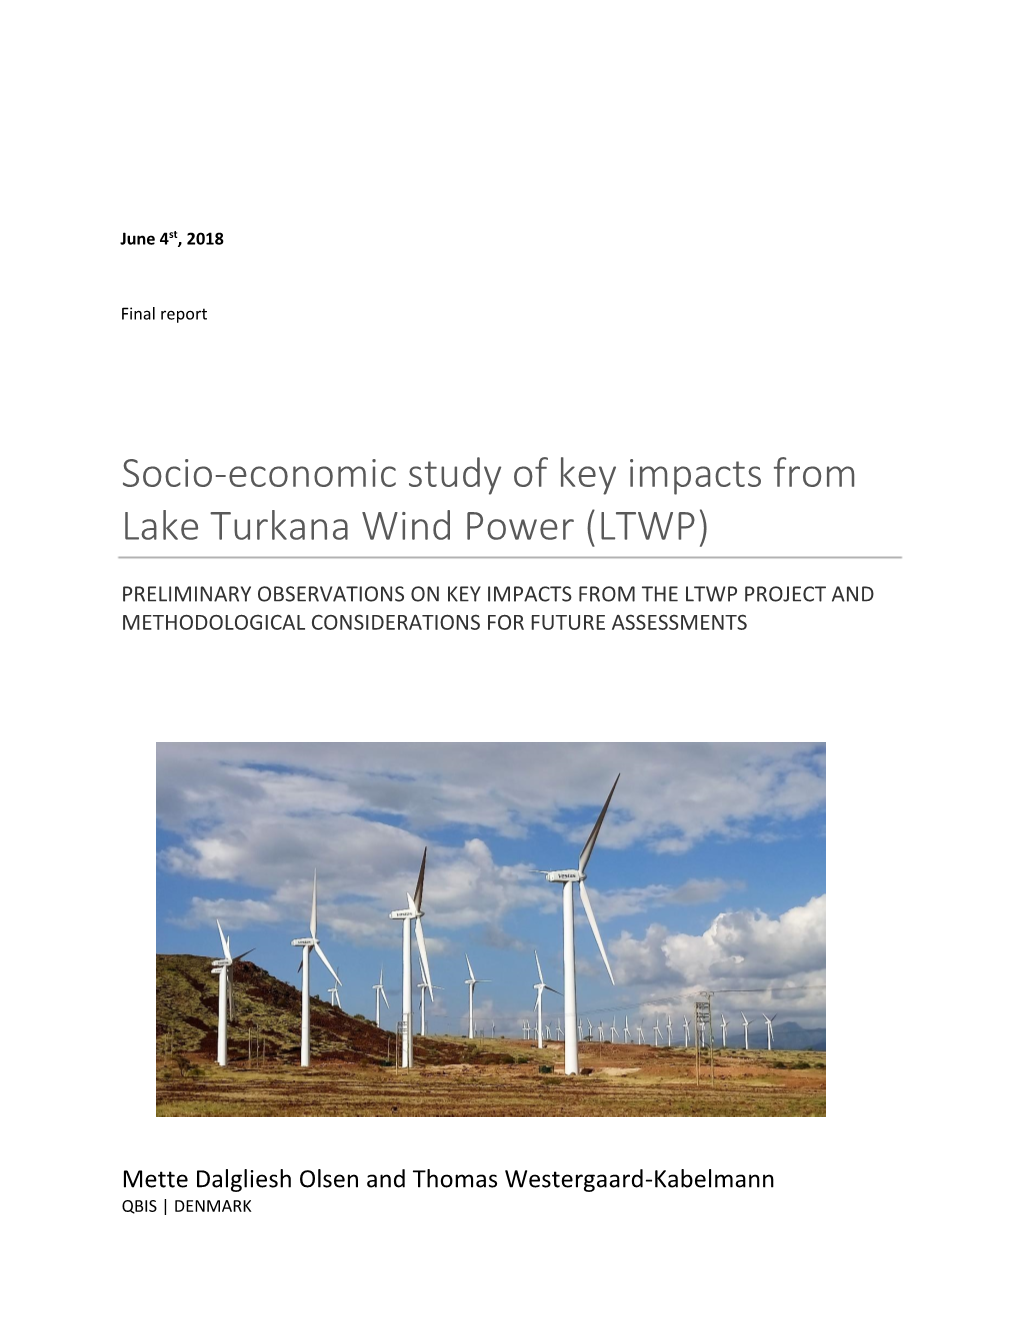 Socio-Economic Study of Key Impacts from Lake Turkana Wind Power (LTWP)